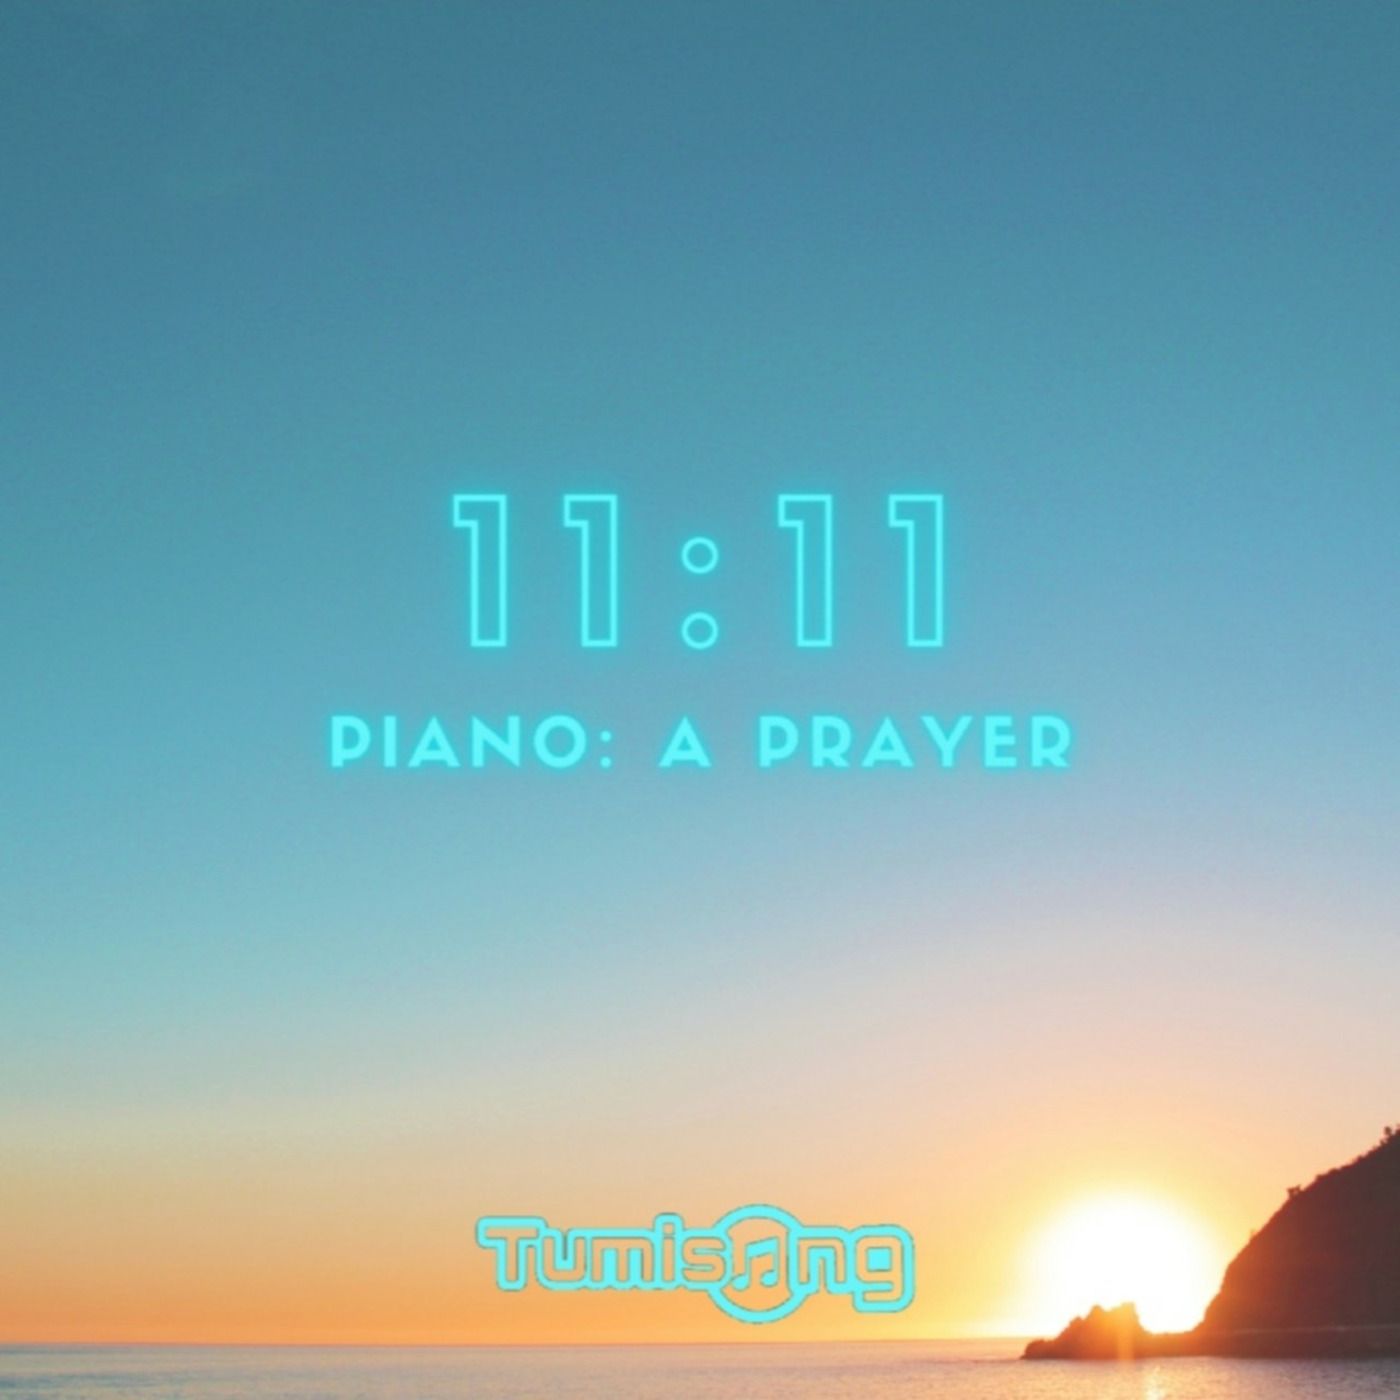 Tumisong - Piano (A Prayer) mixed by Tumisong